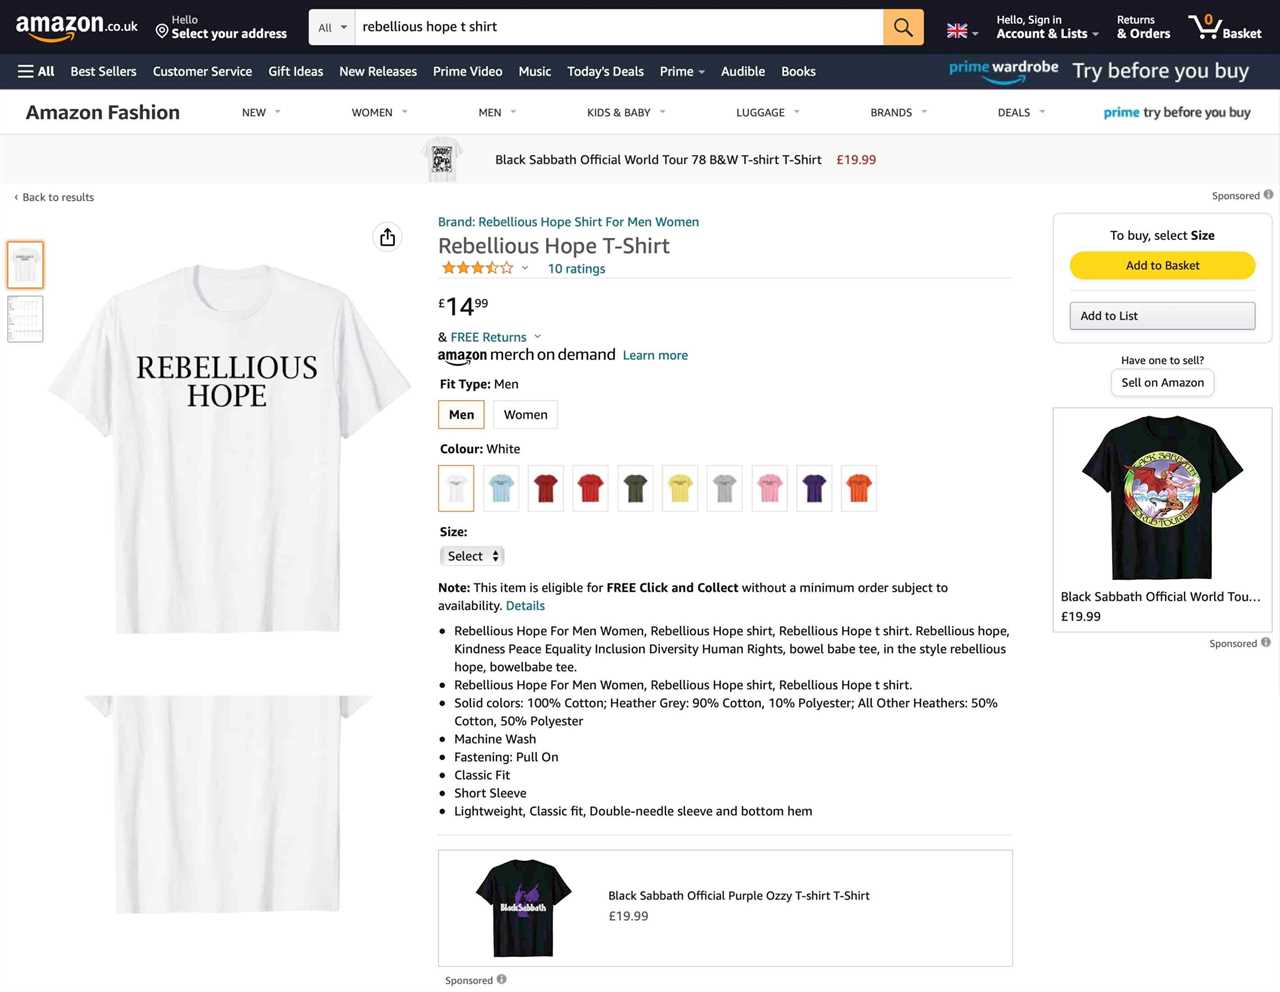 Outrage as fake Dame Deborah James ‘Rebellious Hope’ T-shirts found for £15 on Amazon